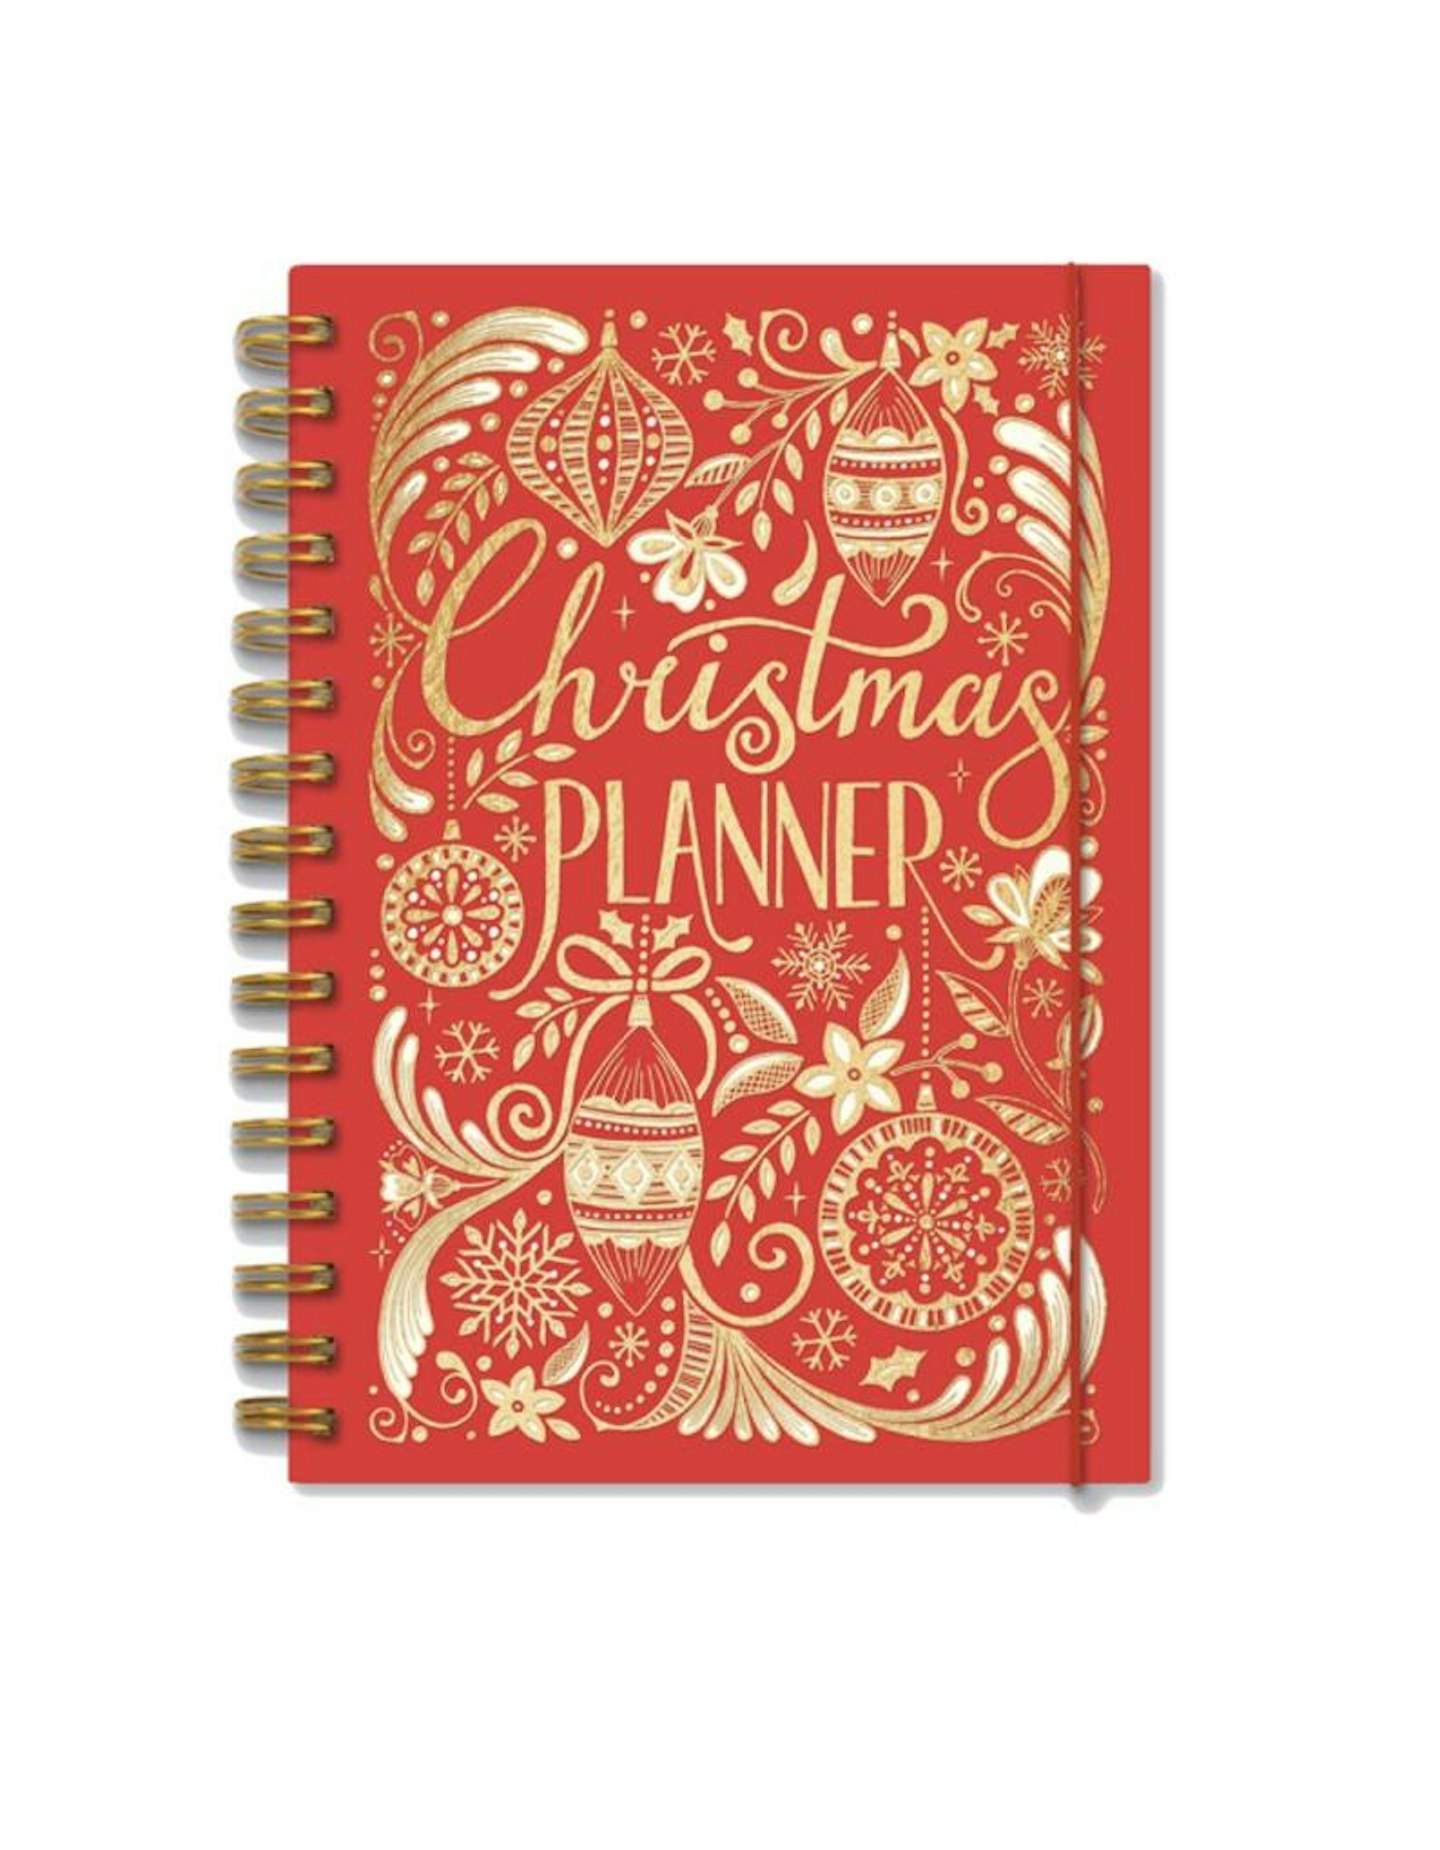 Best Christmas planner: FrankieDoodleGifts Christmas Planner